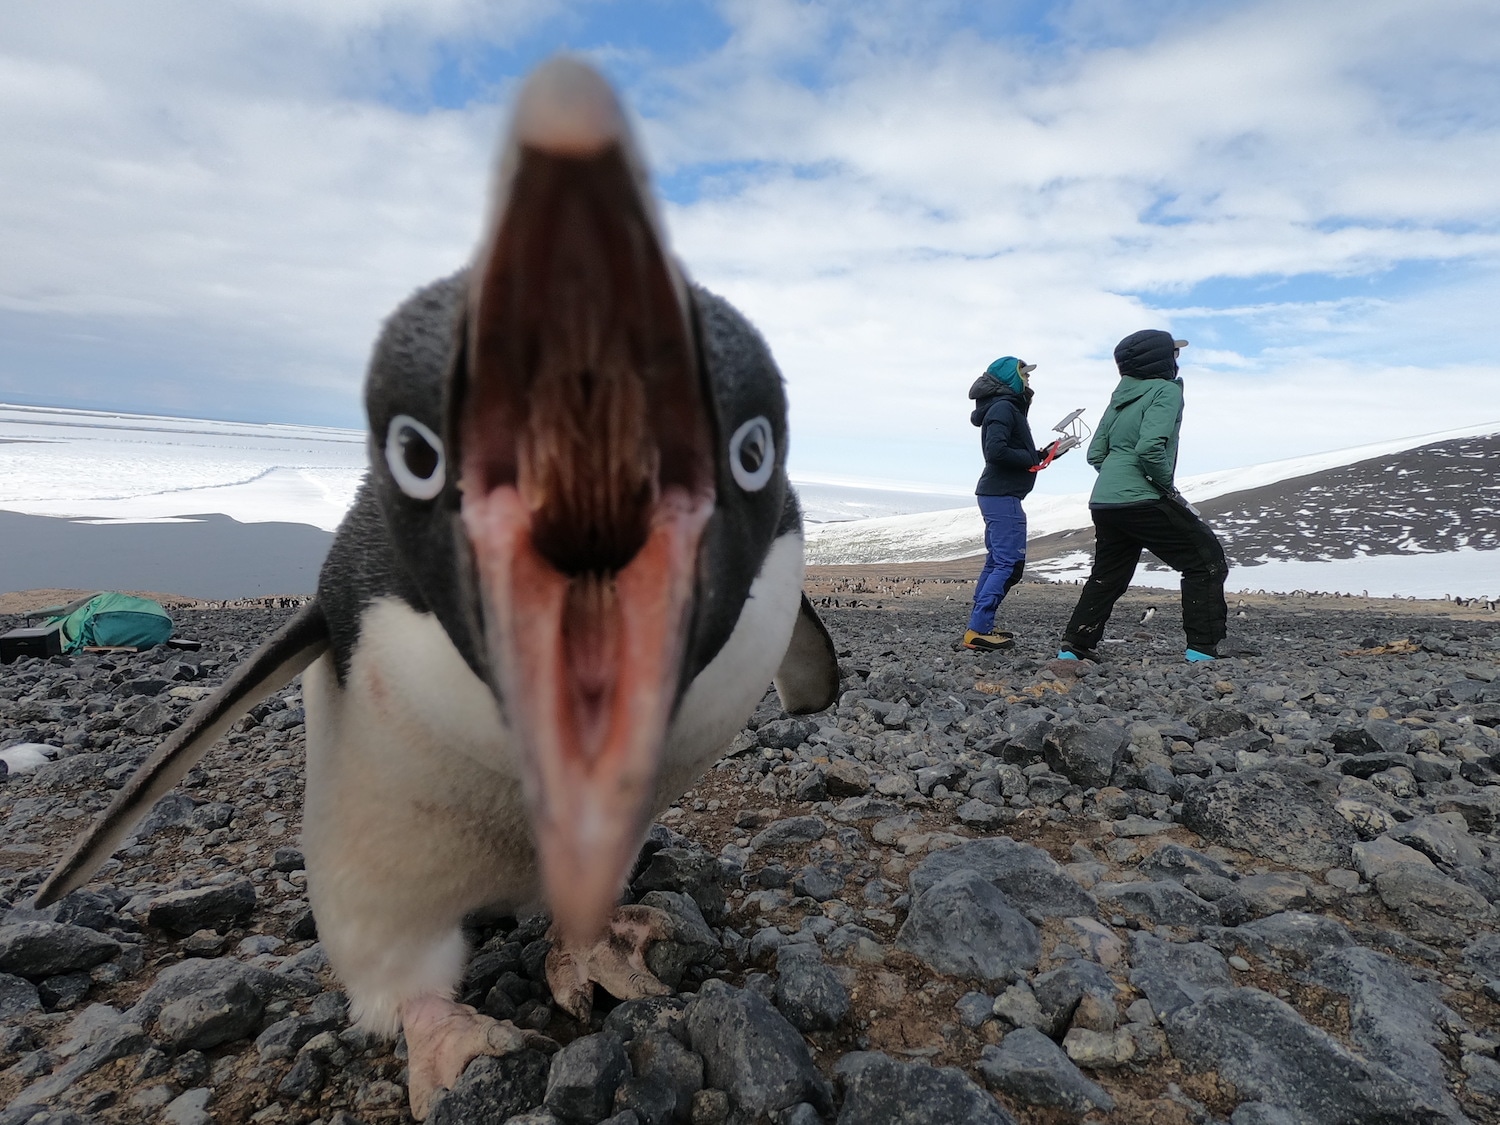 An Adélies penguin facing the camera with an open beak